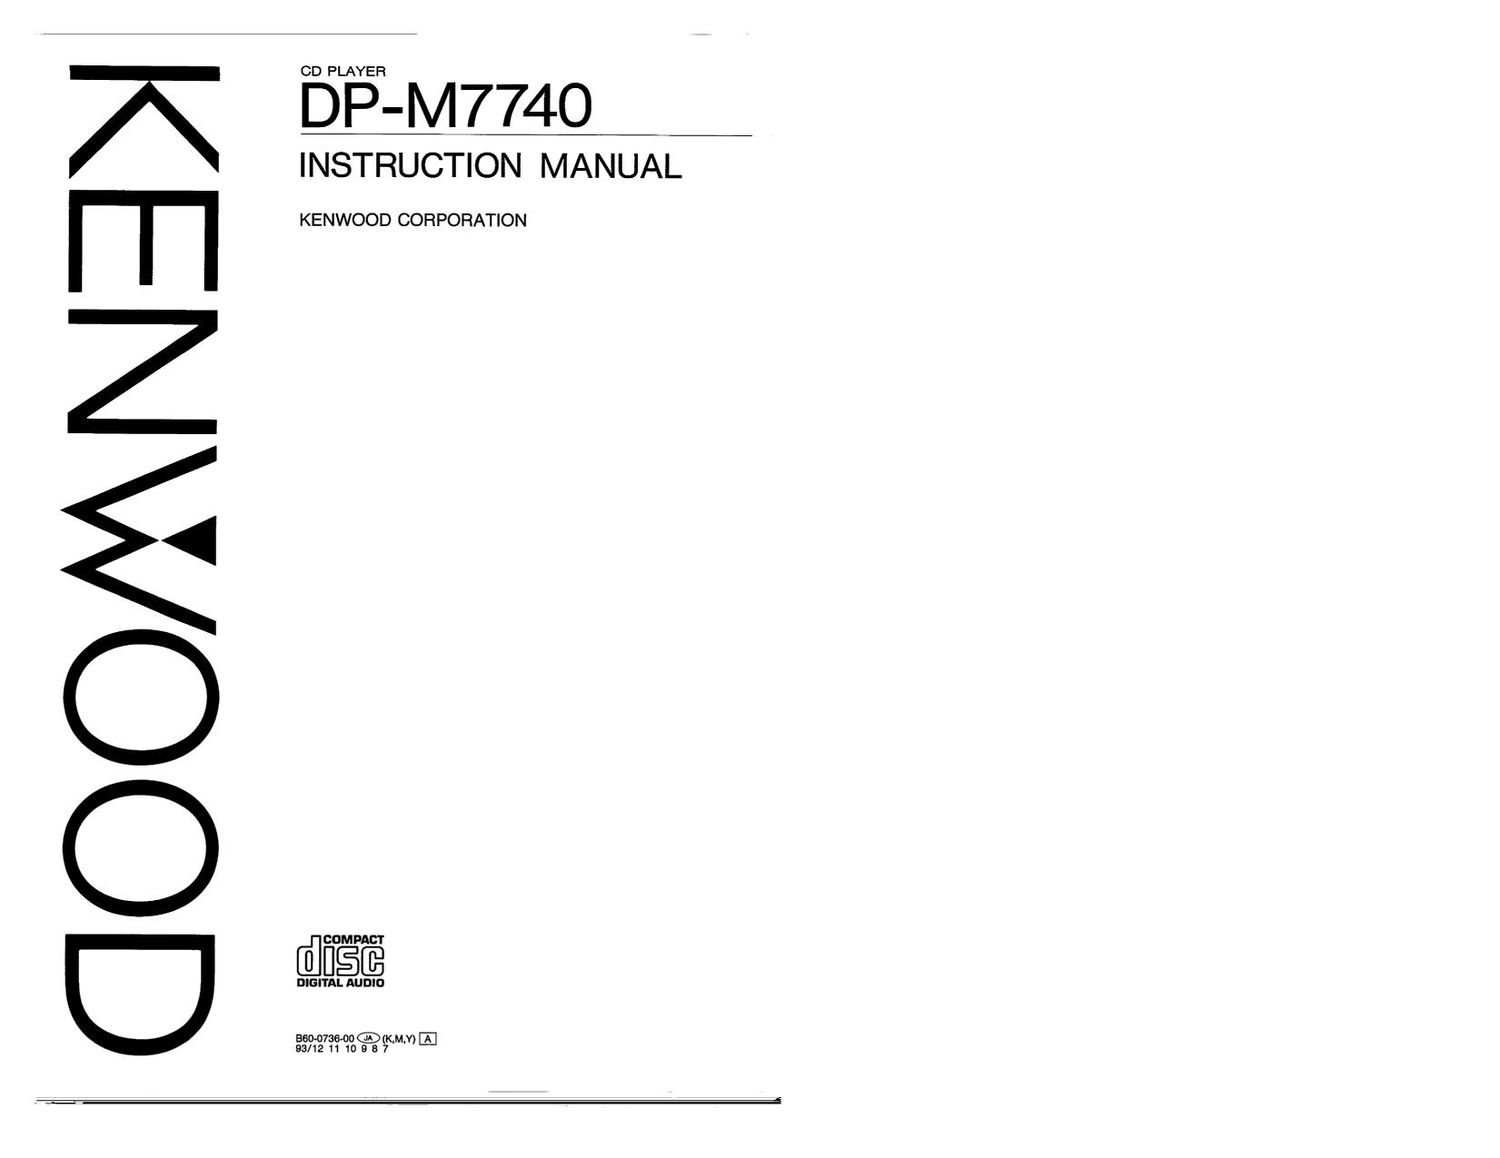 Kenwood DPM 7740 Owners Manual